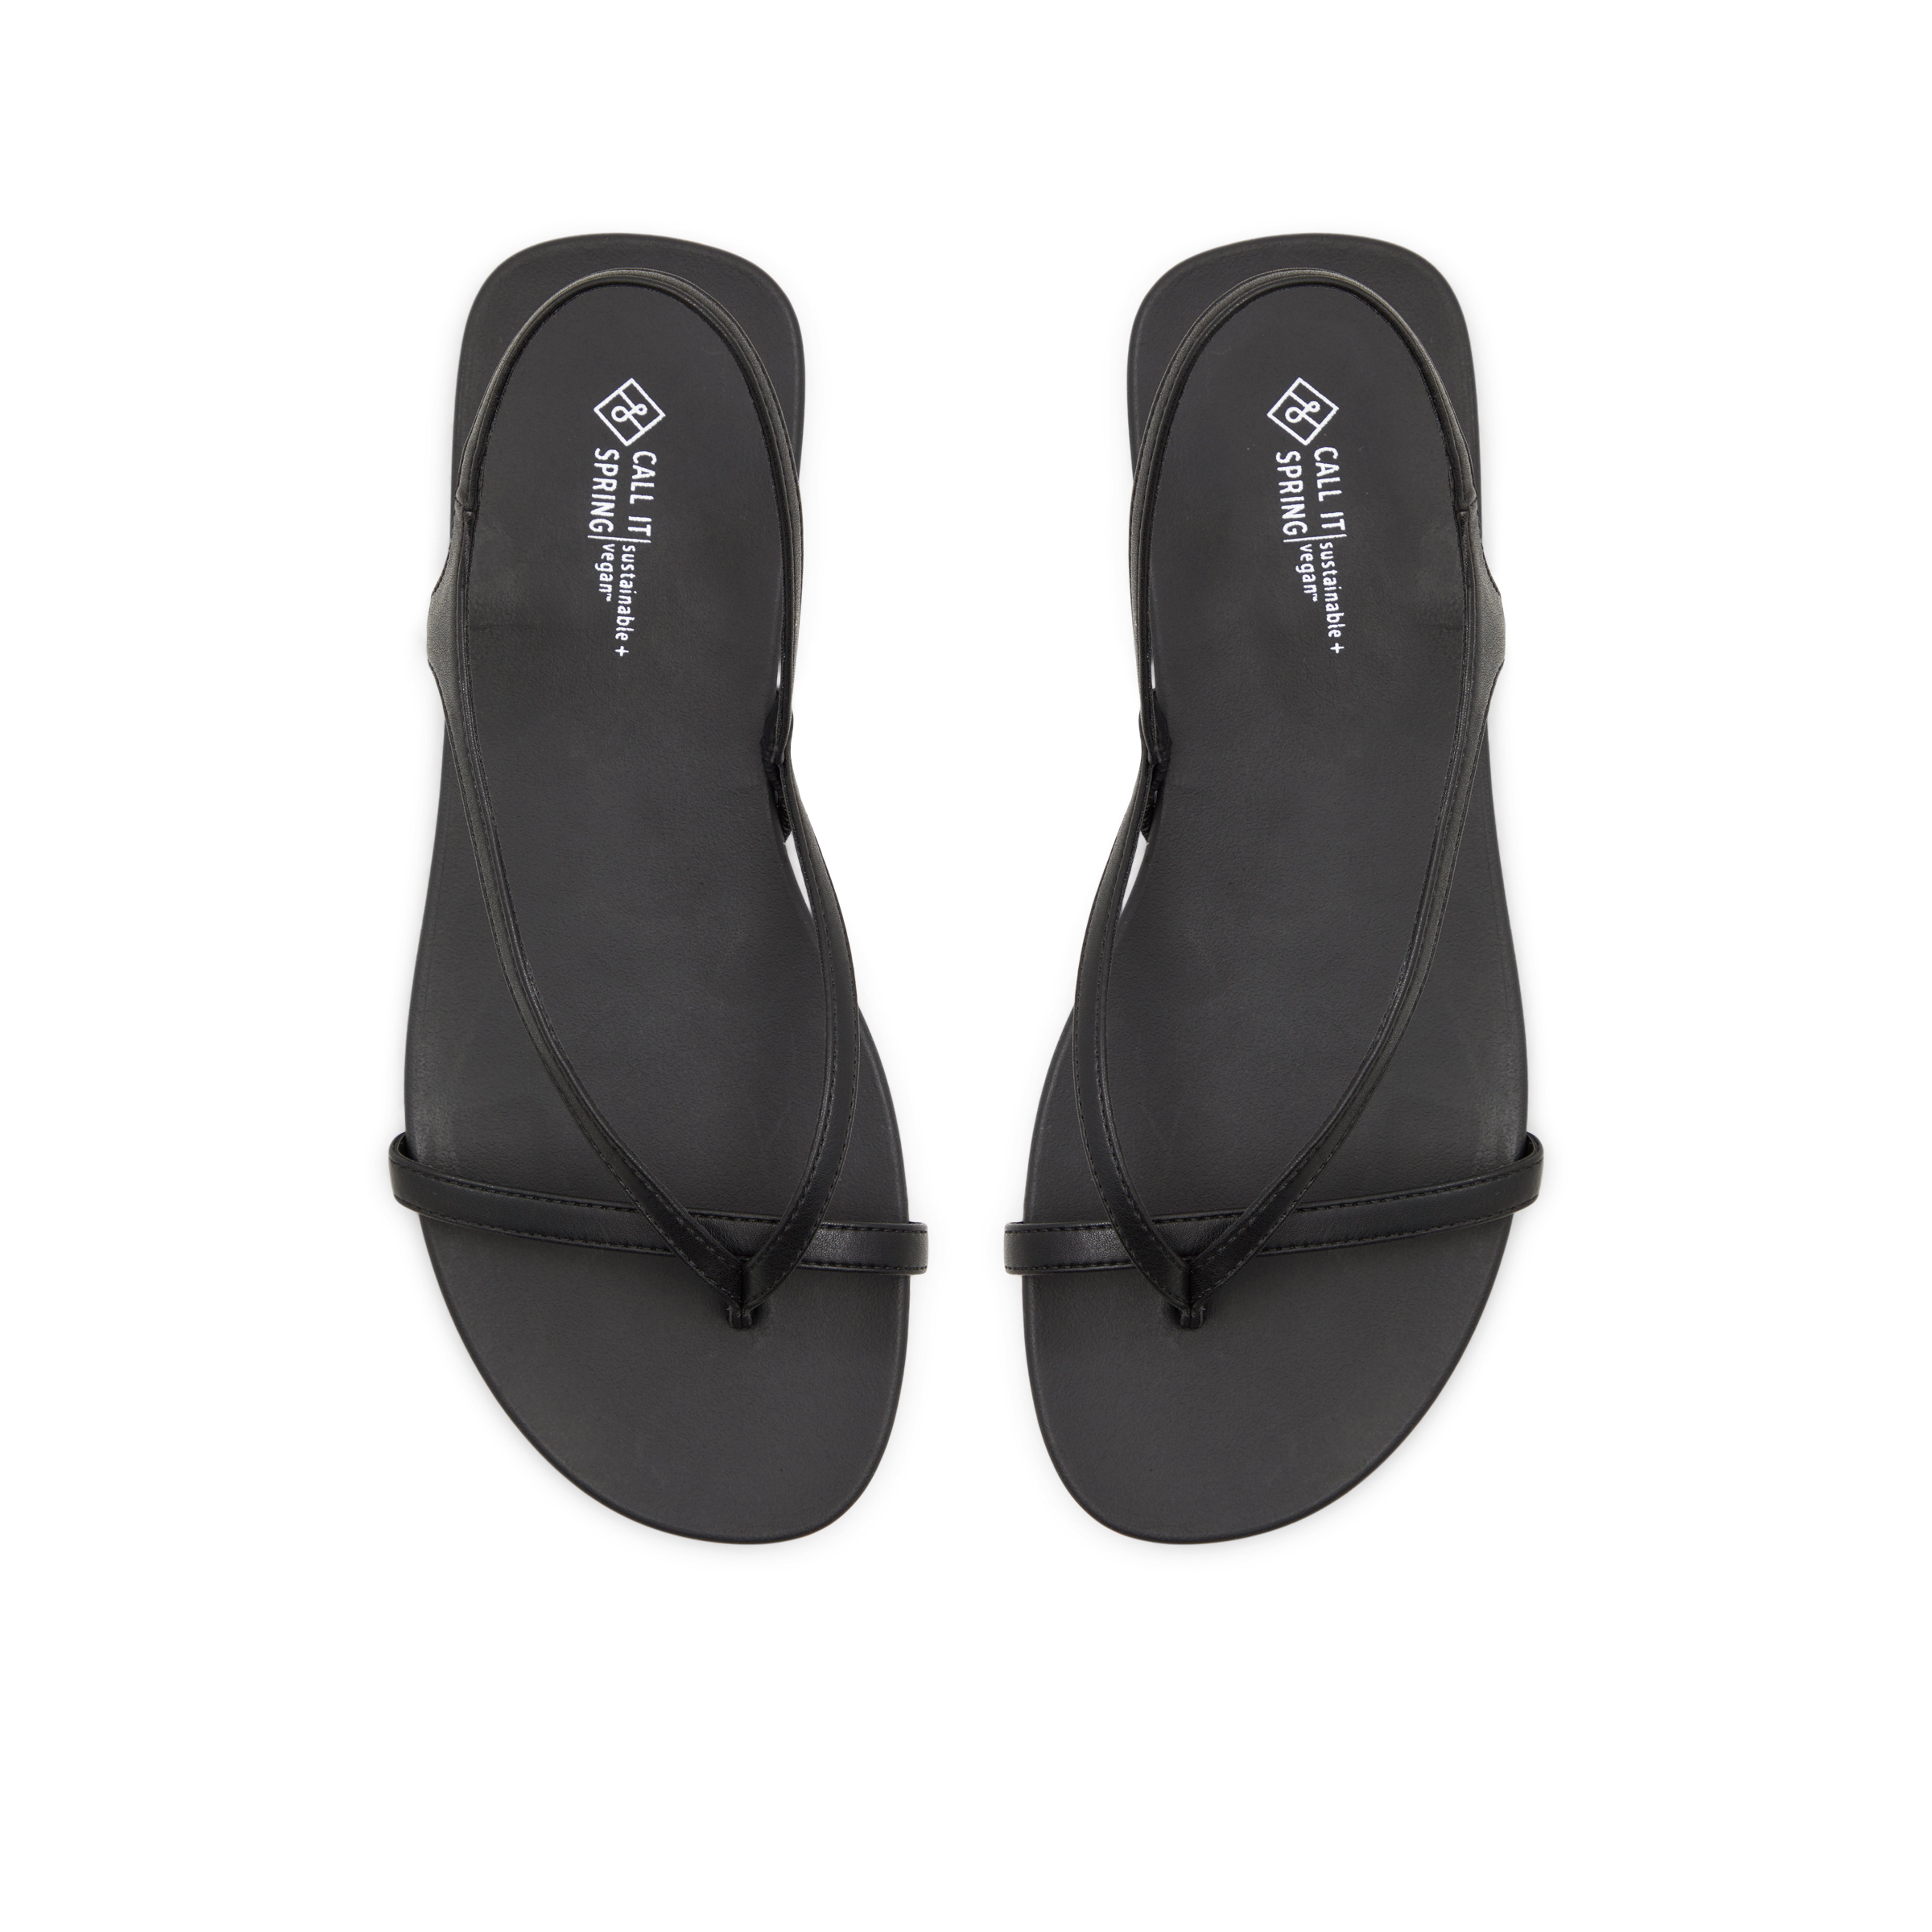 Montebello Women's Black Flat Sandals image number 1